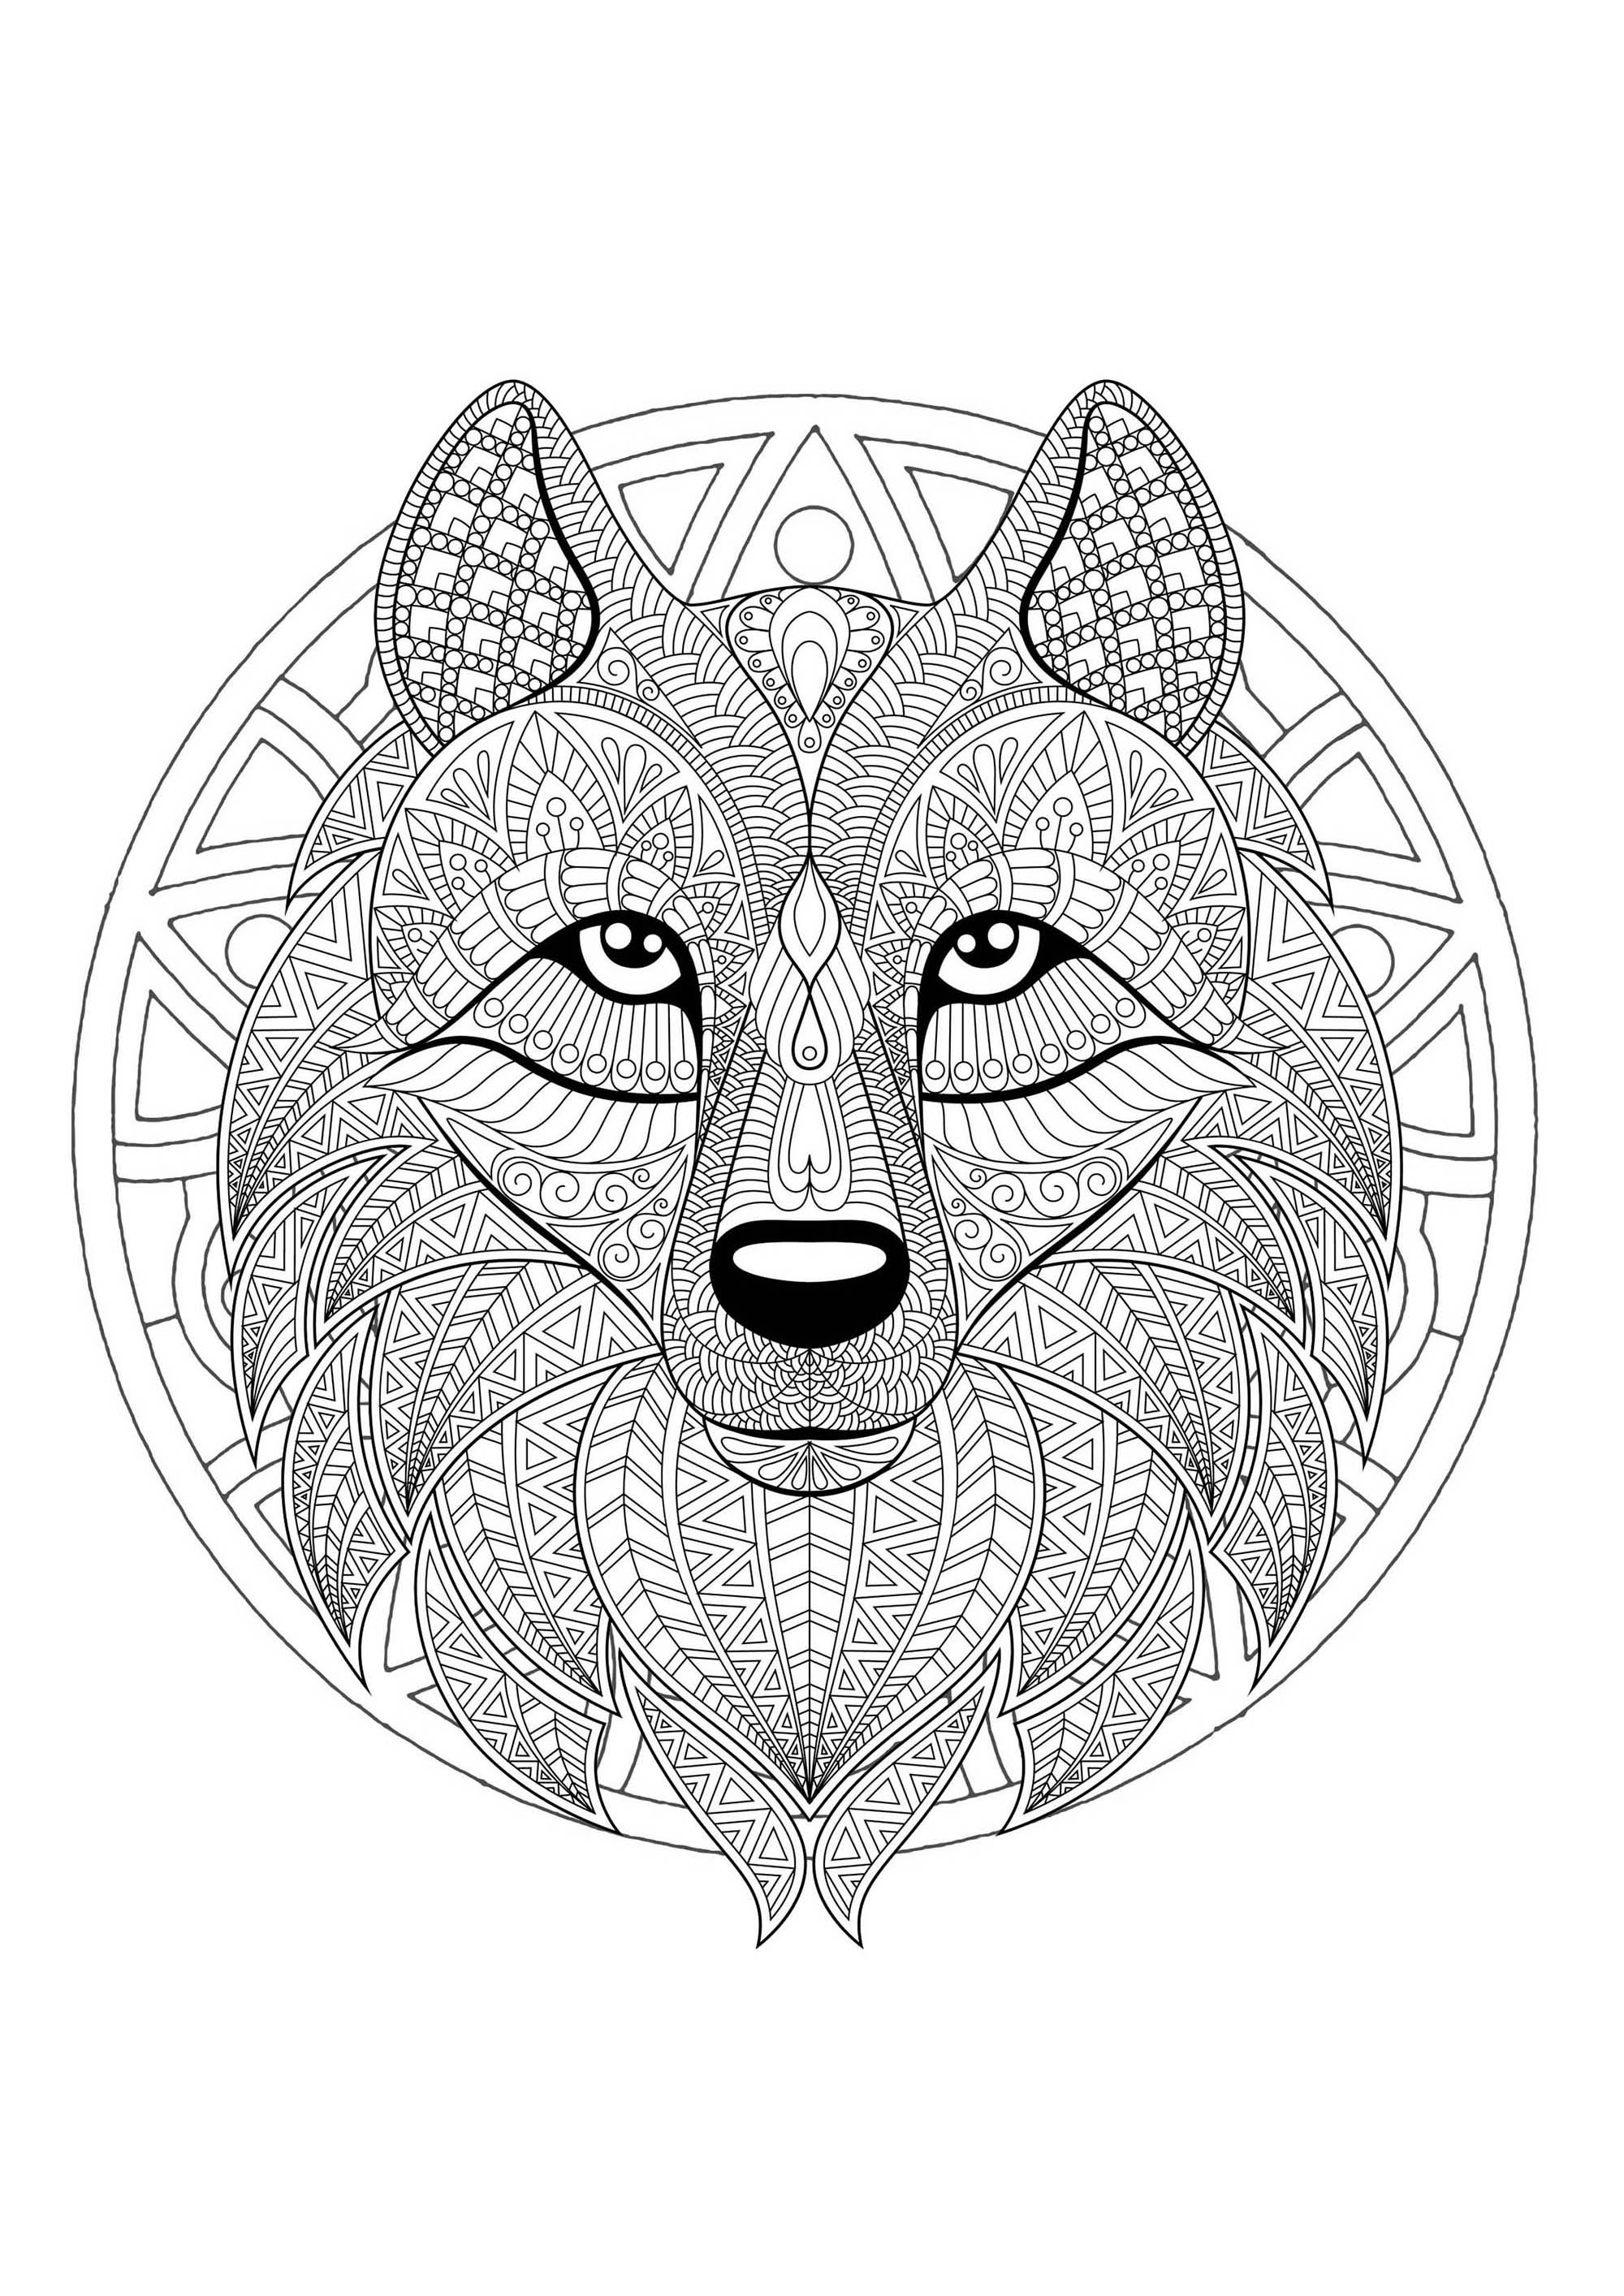 coloring mandala wolf head mandalas adult patterns geometric complex